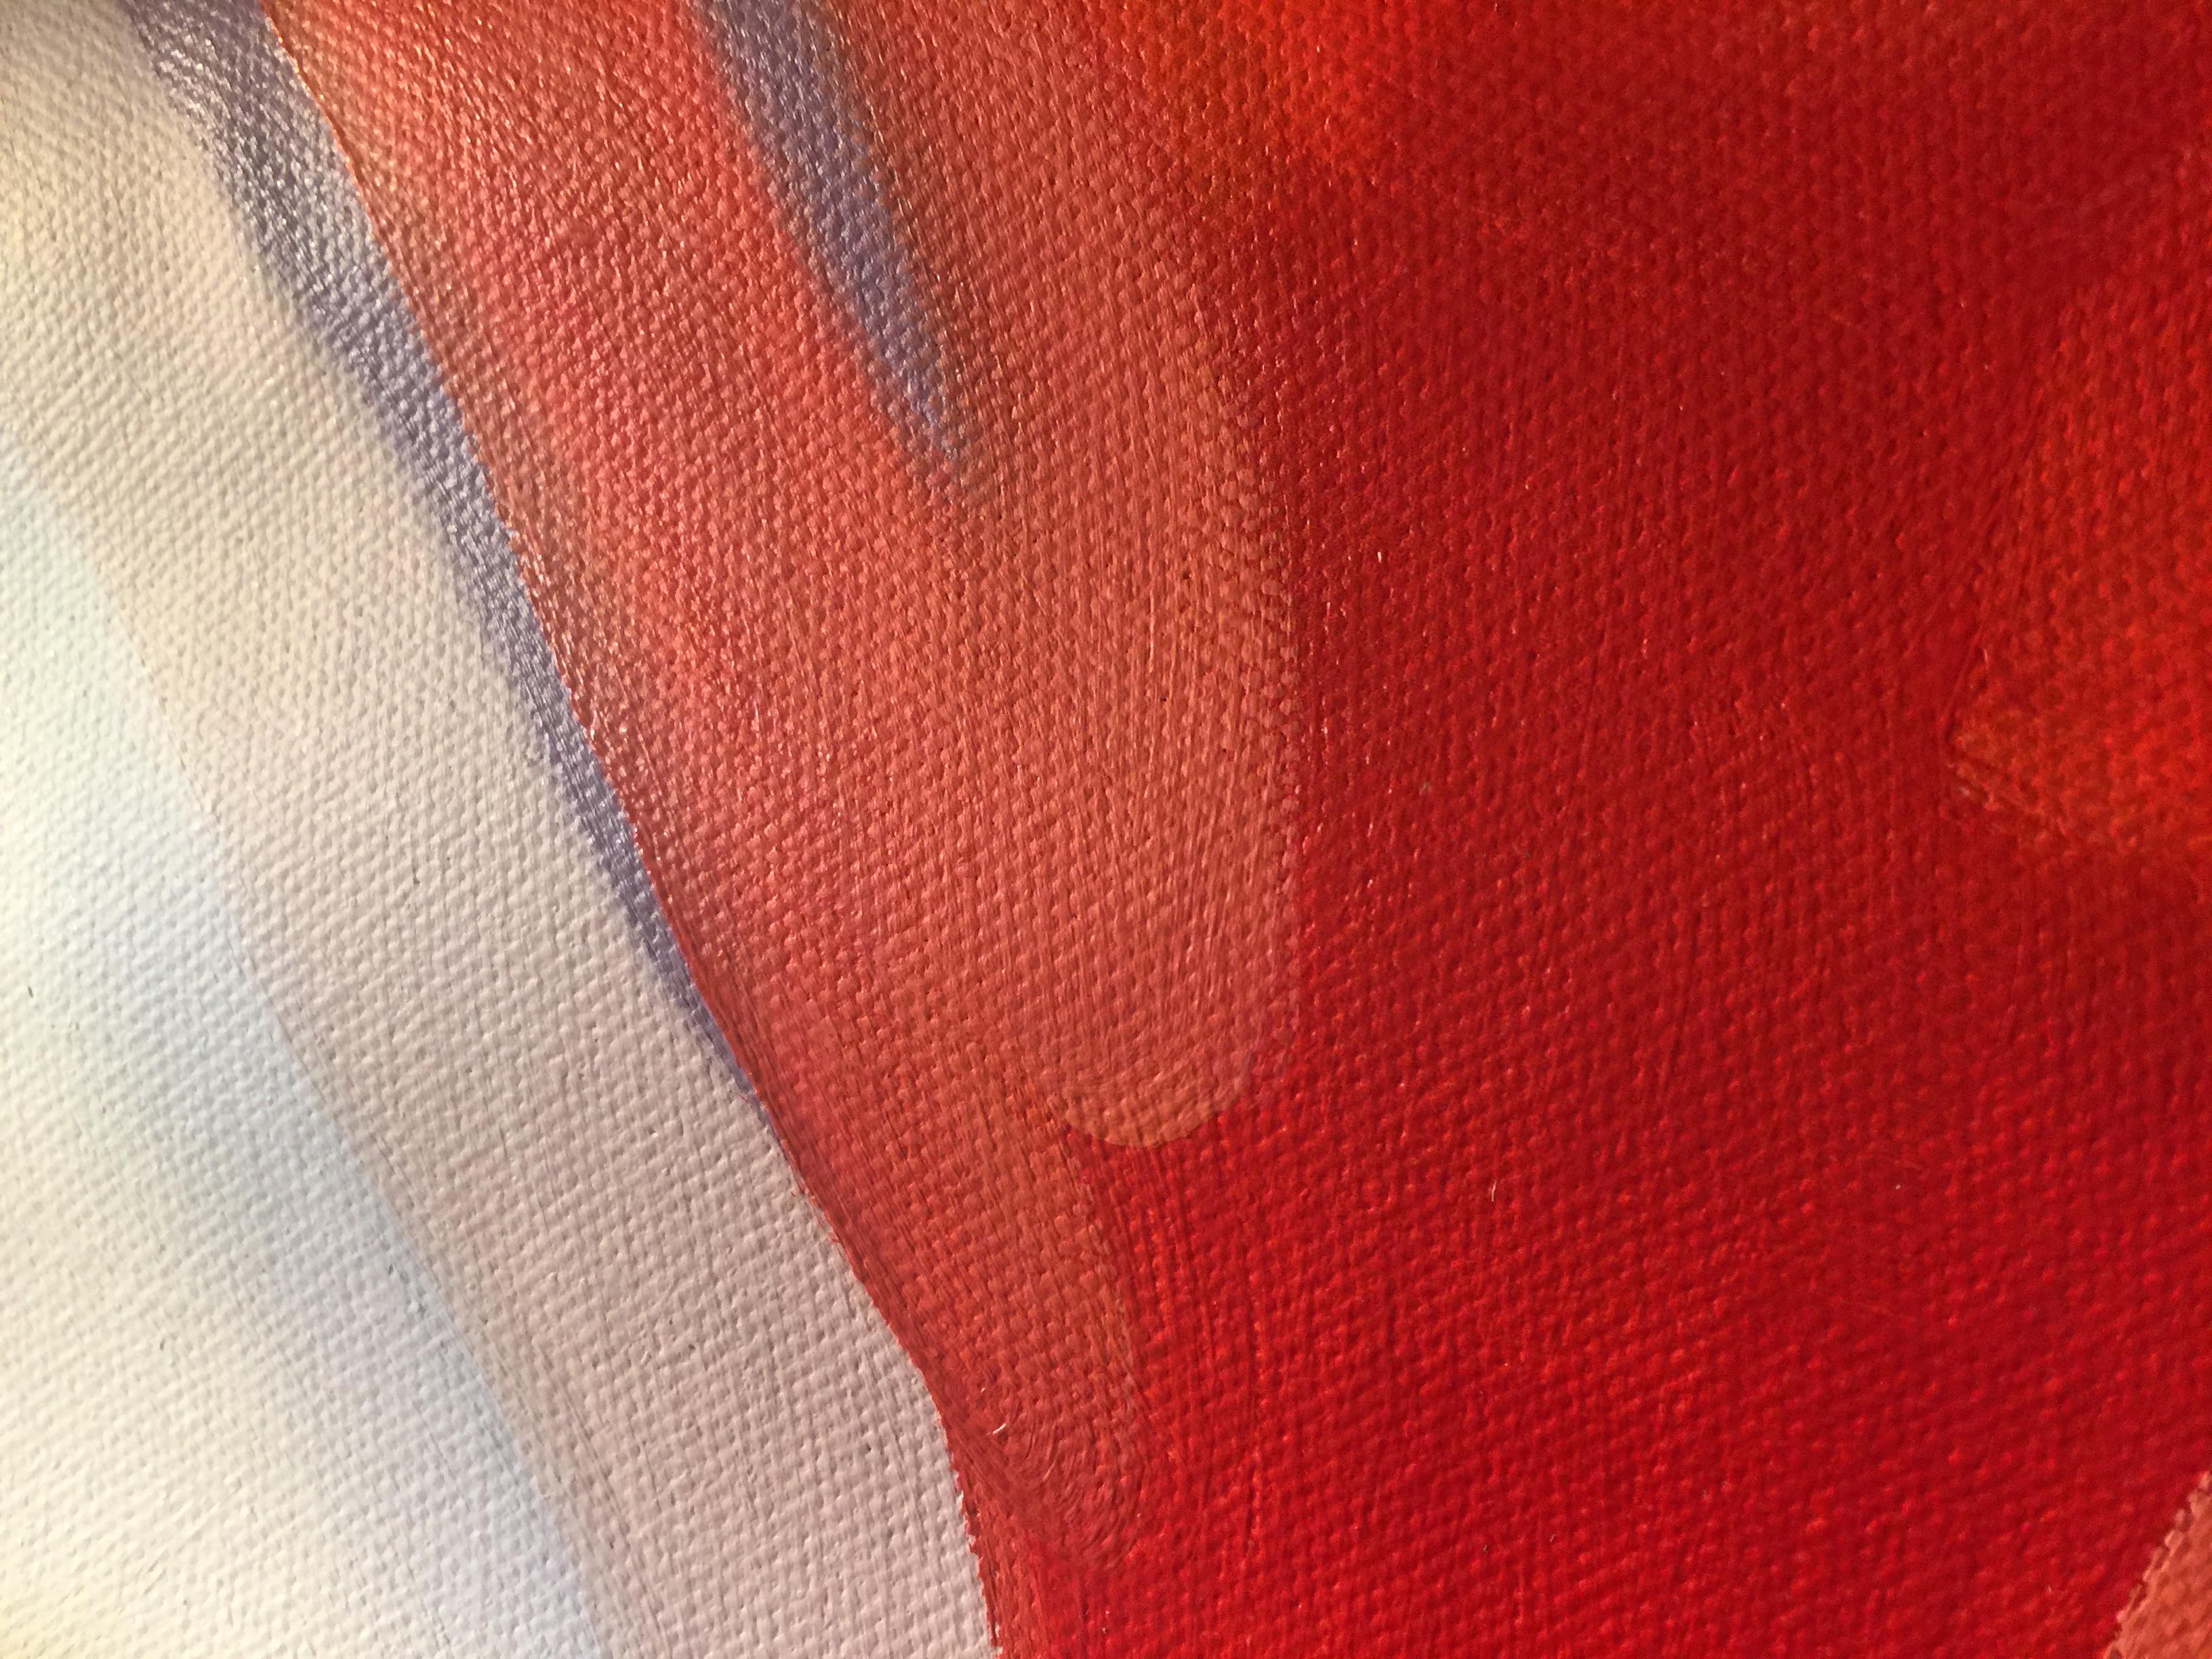 Abstraktes Ölgemälde auf Leinwand 36x36, Vulkan, rot-orange, spektakulär (Pink), Abstract Painting, von Irena Orlov